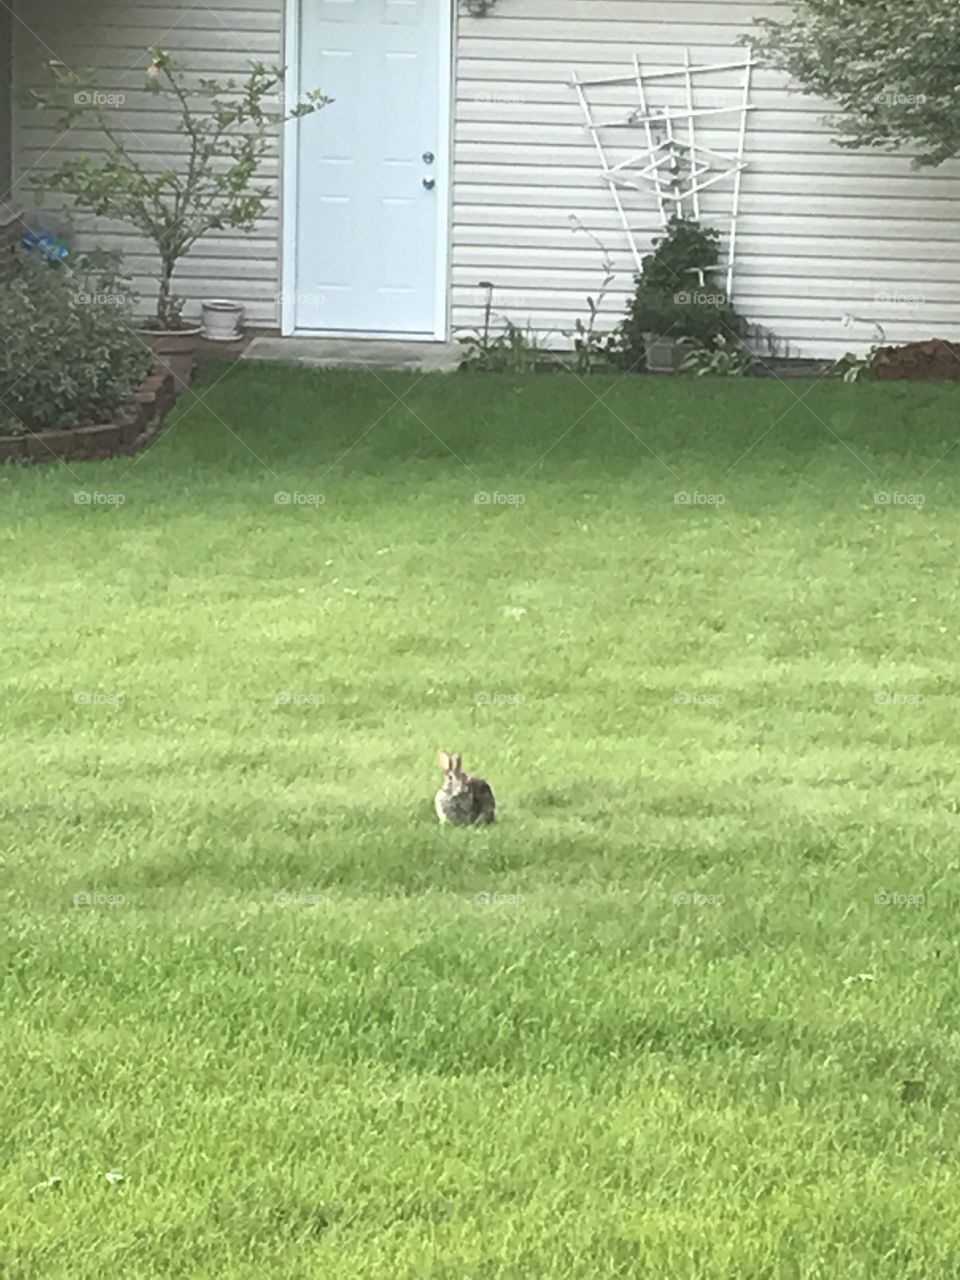 Rabbit seen chilling in my grandmother's backyard.